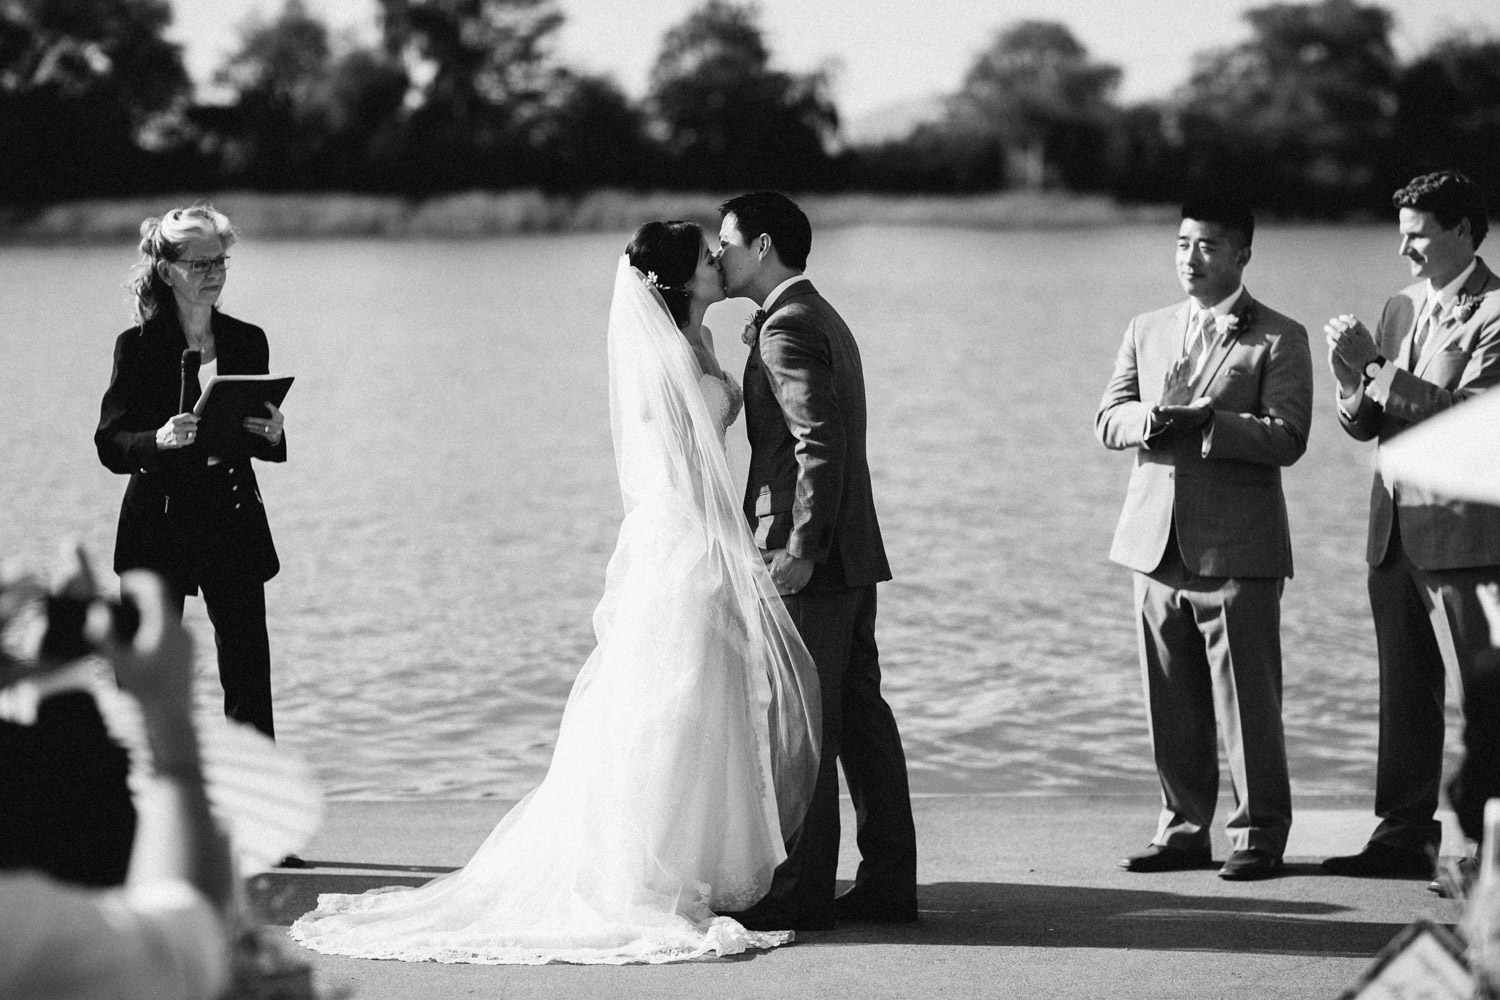 ubc boathouse wedding photography richmond bc first kiss